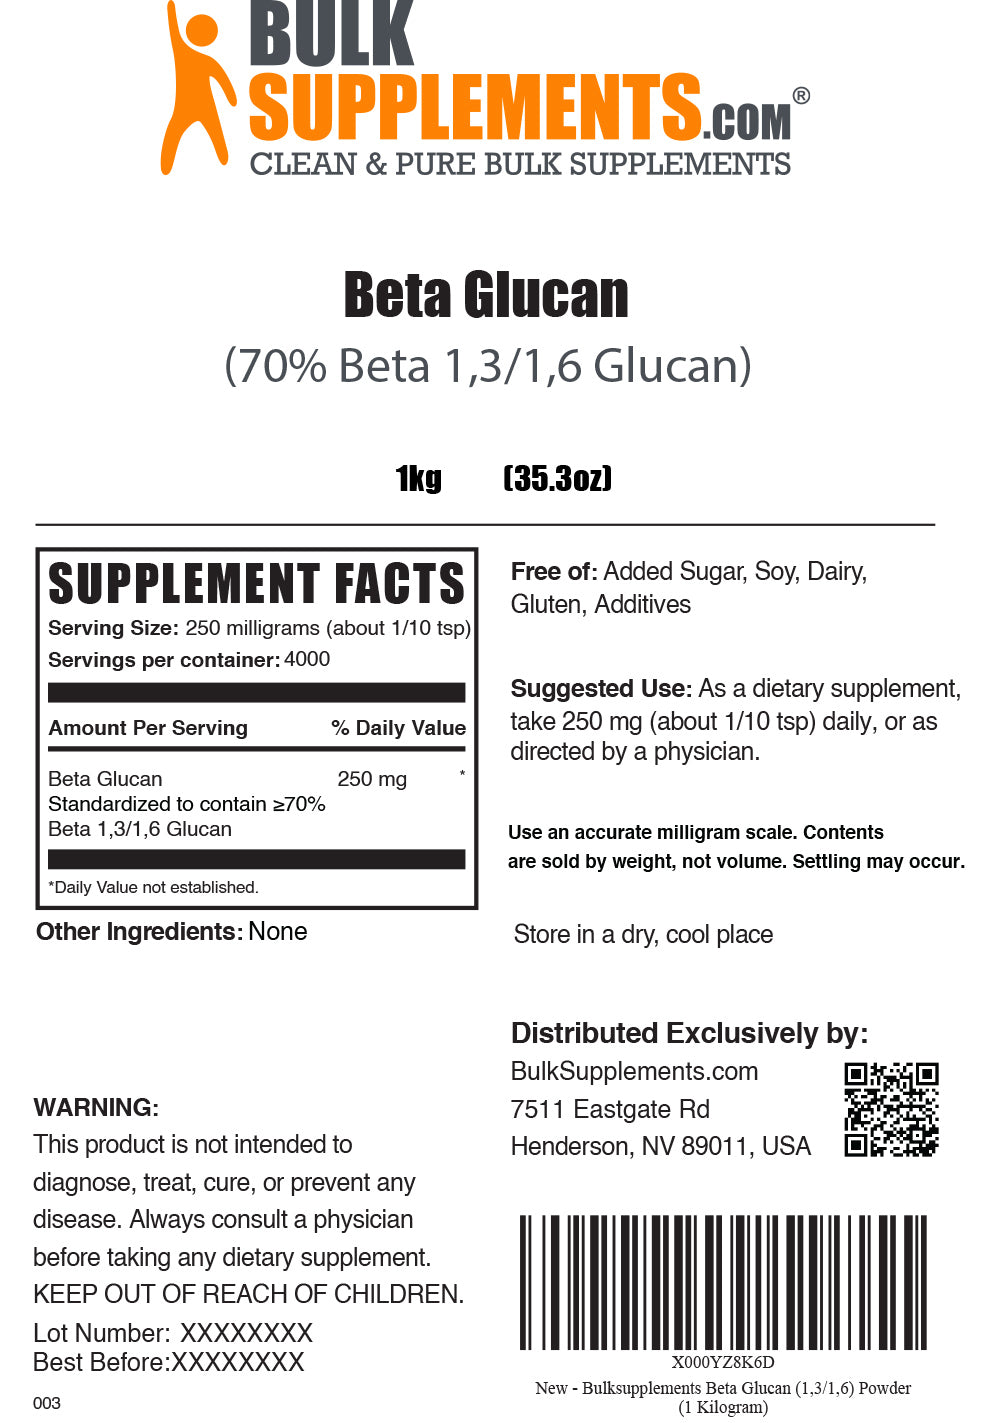 beta glucan supplements	